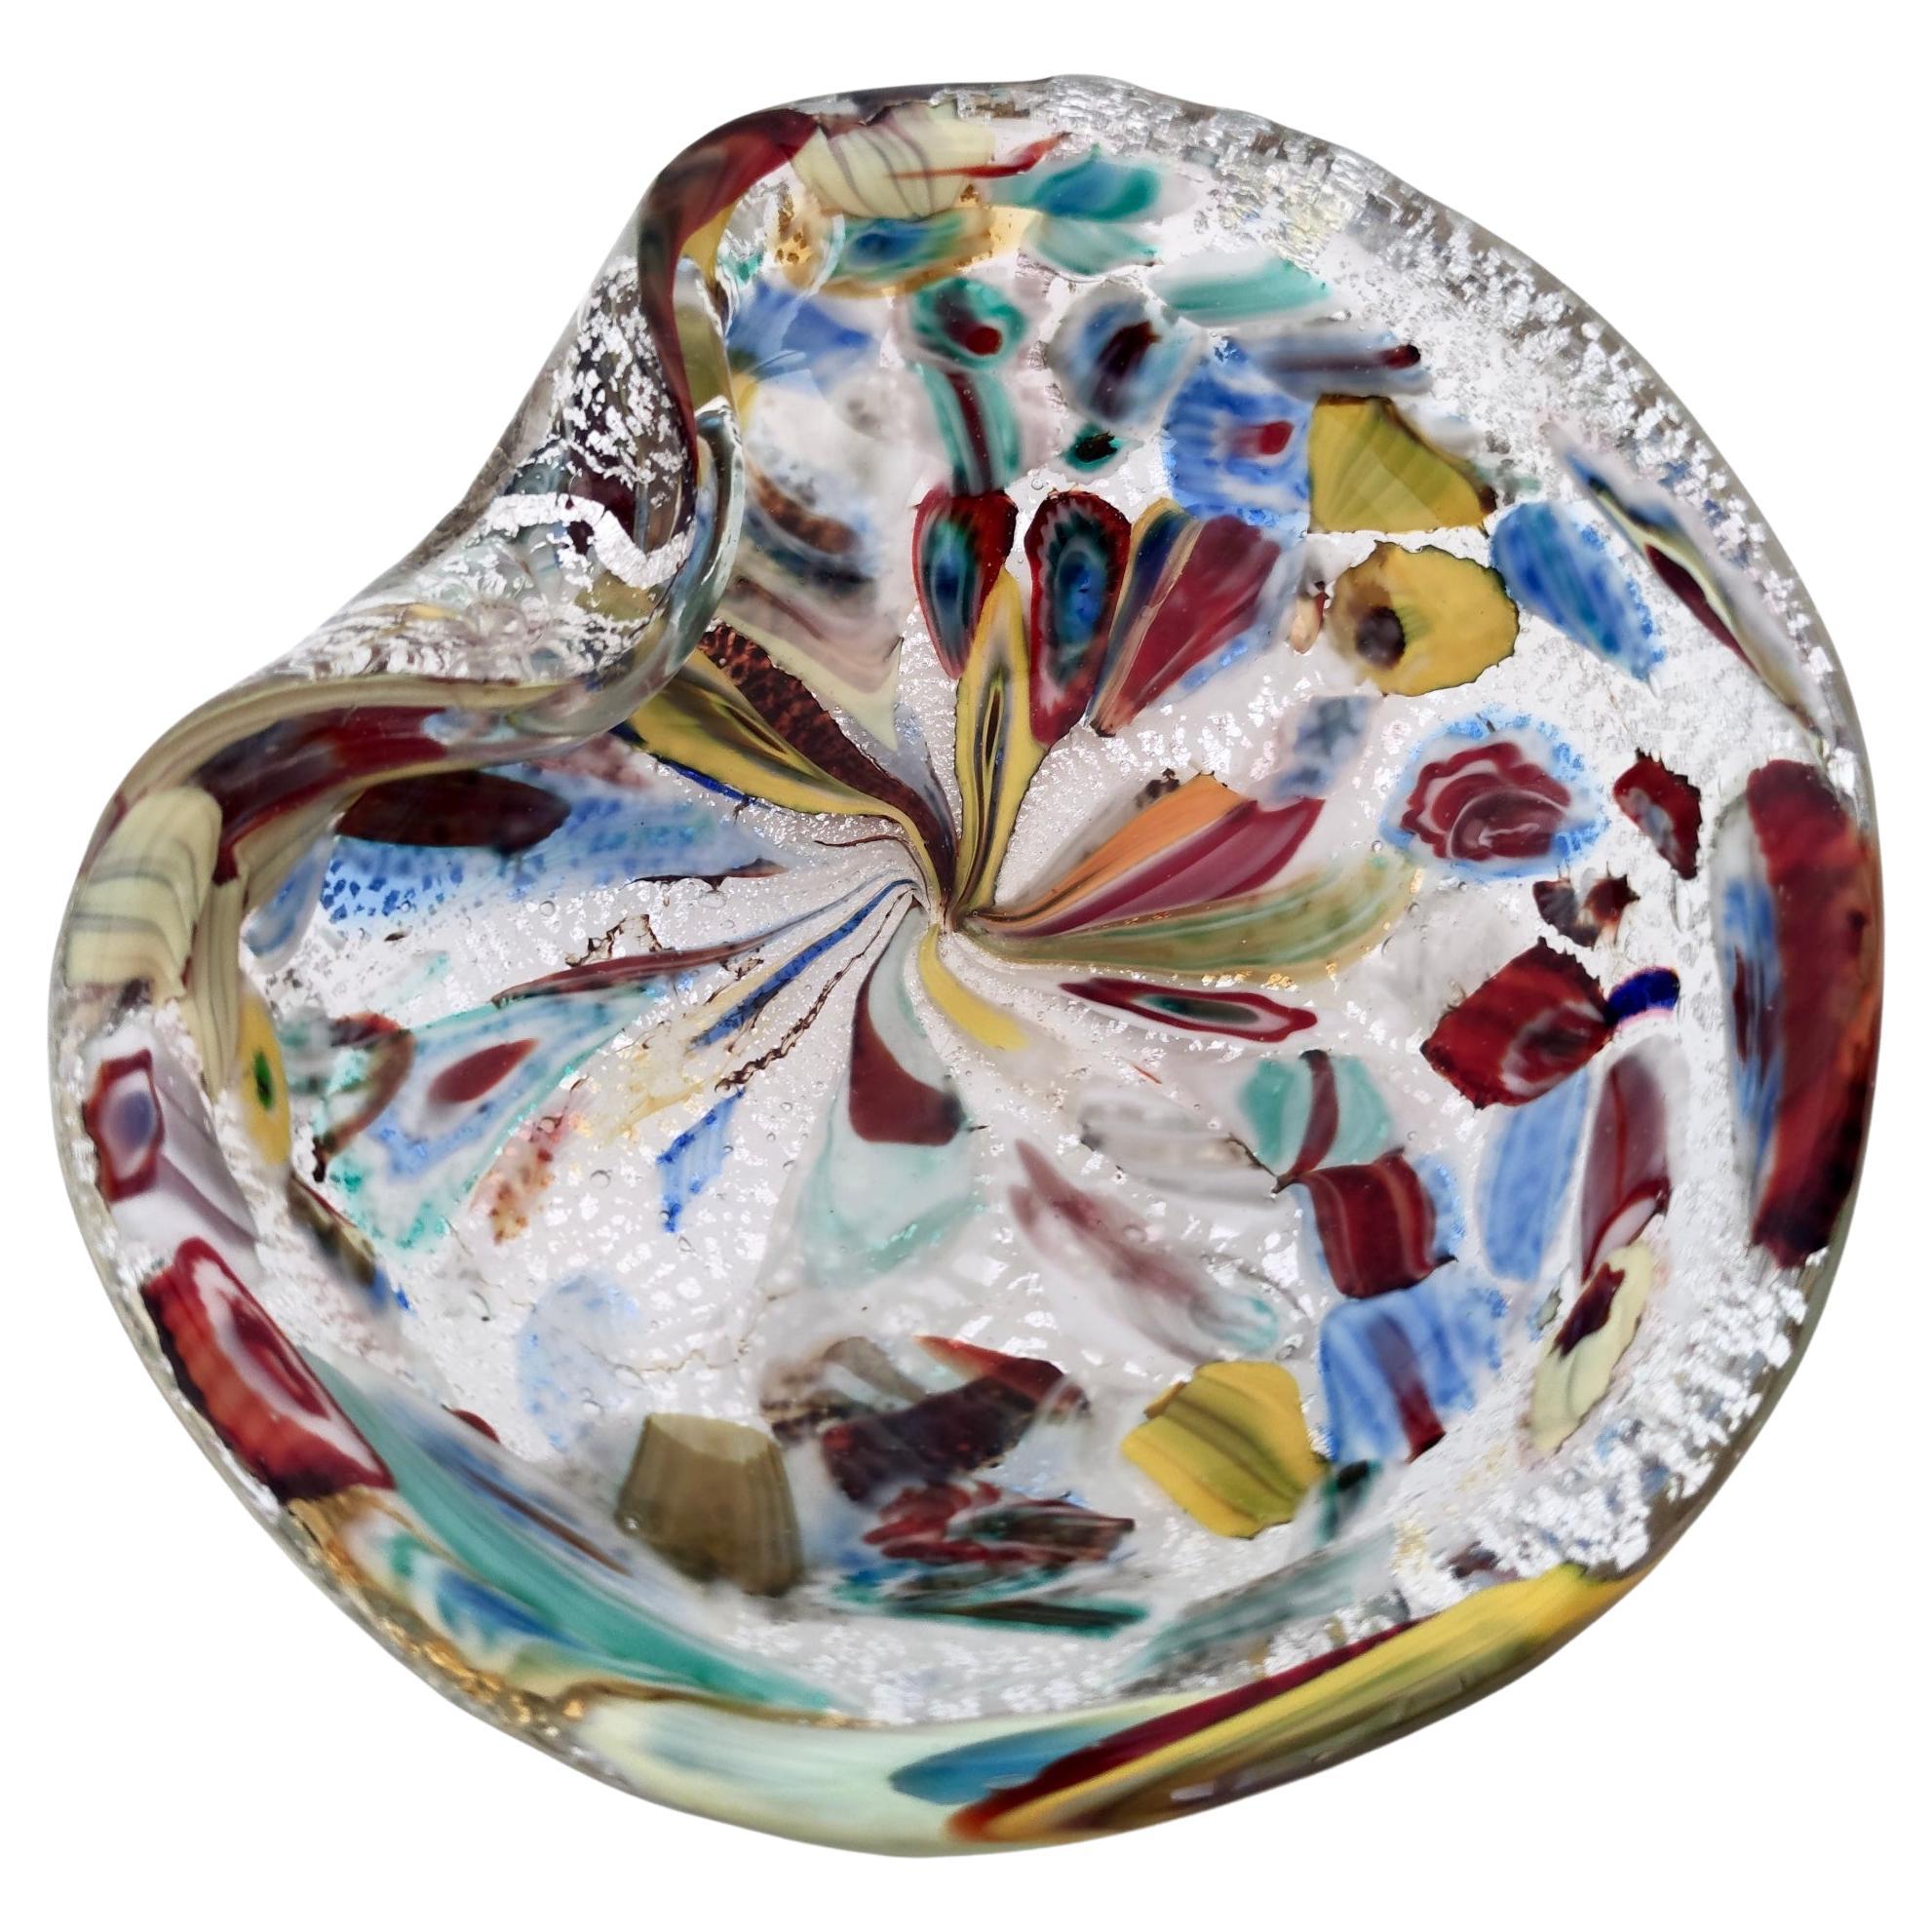 Vintage Murano Glass Ashtray / Vide-Poche by Giulio Radi for Avem